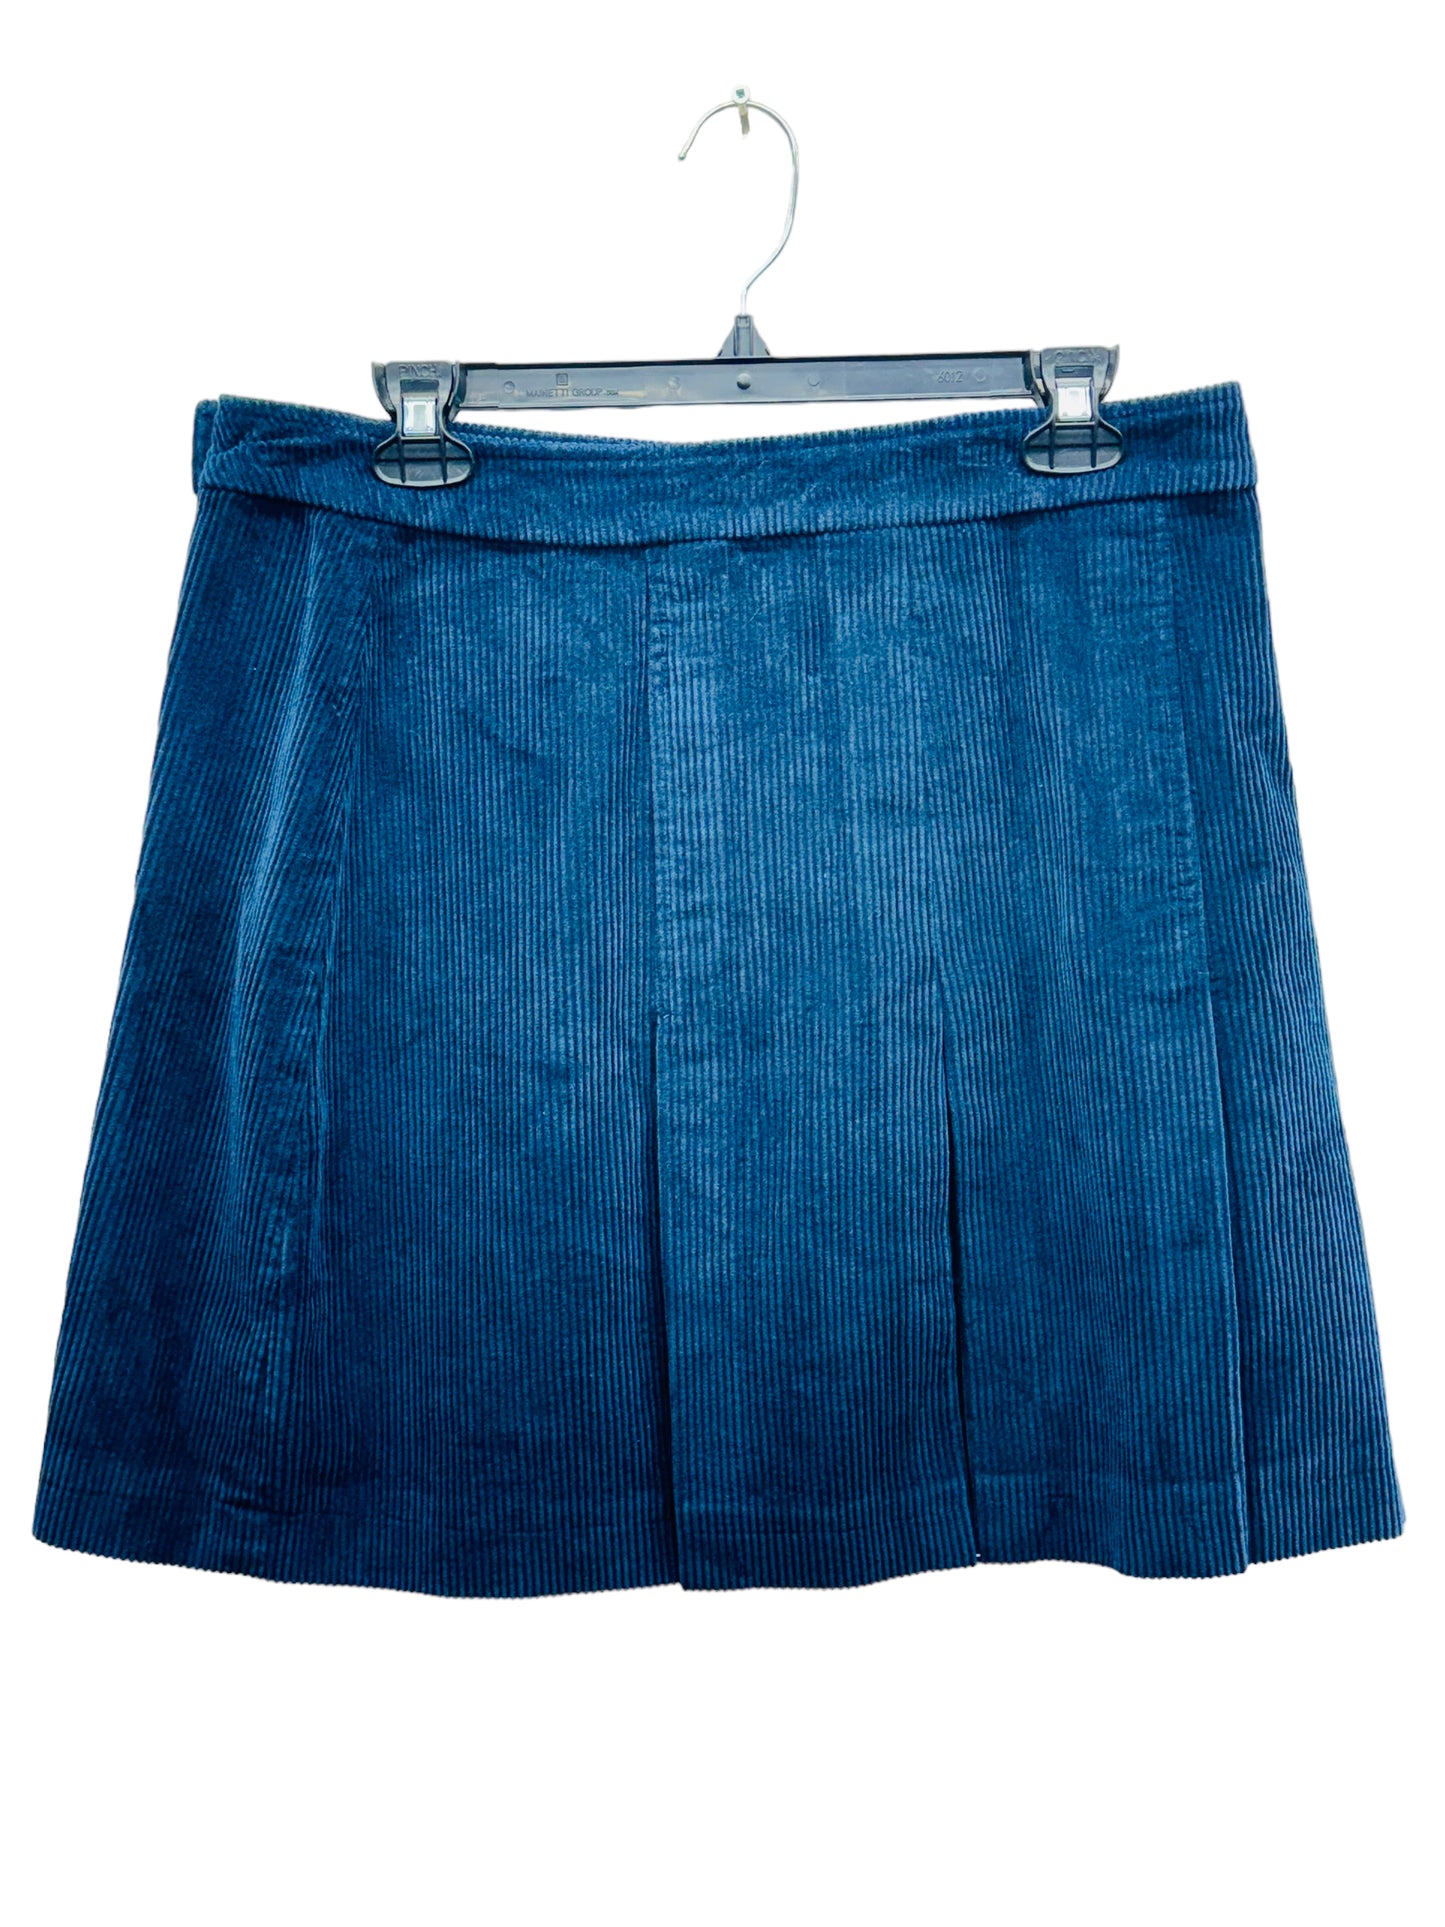 Joules Women’s brand new corduroy mini skirt   - Size 8 us